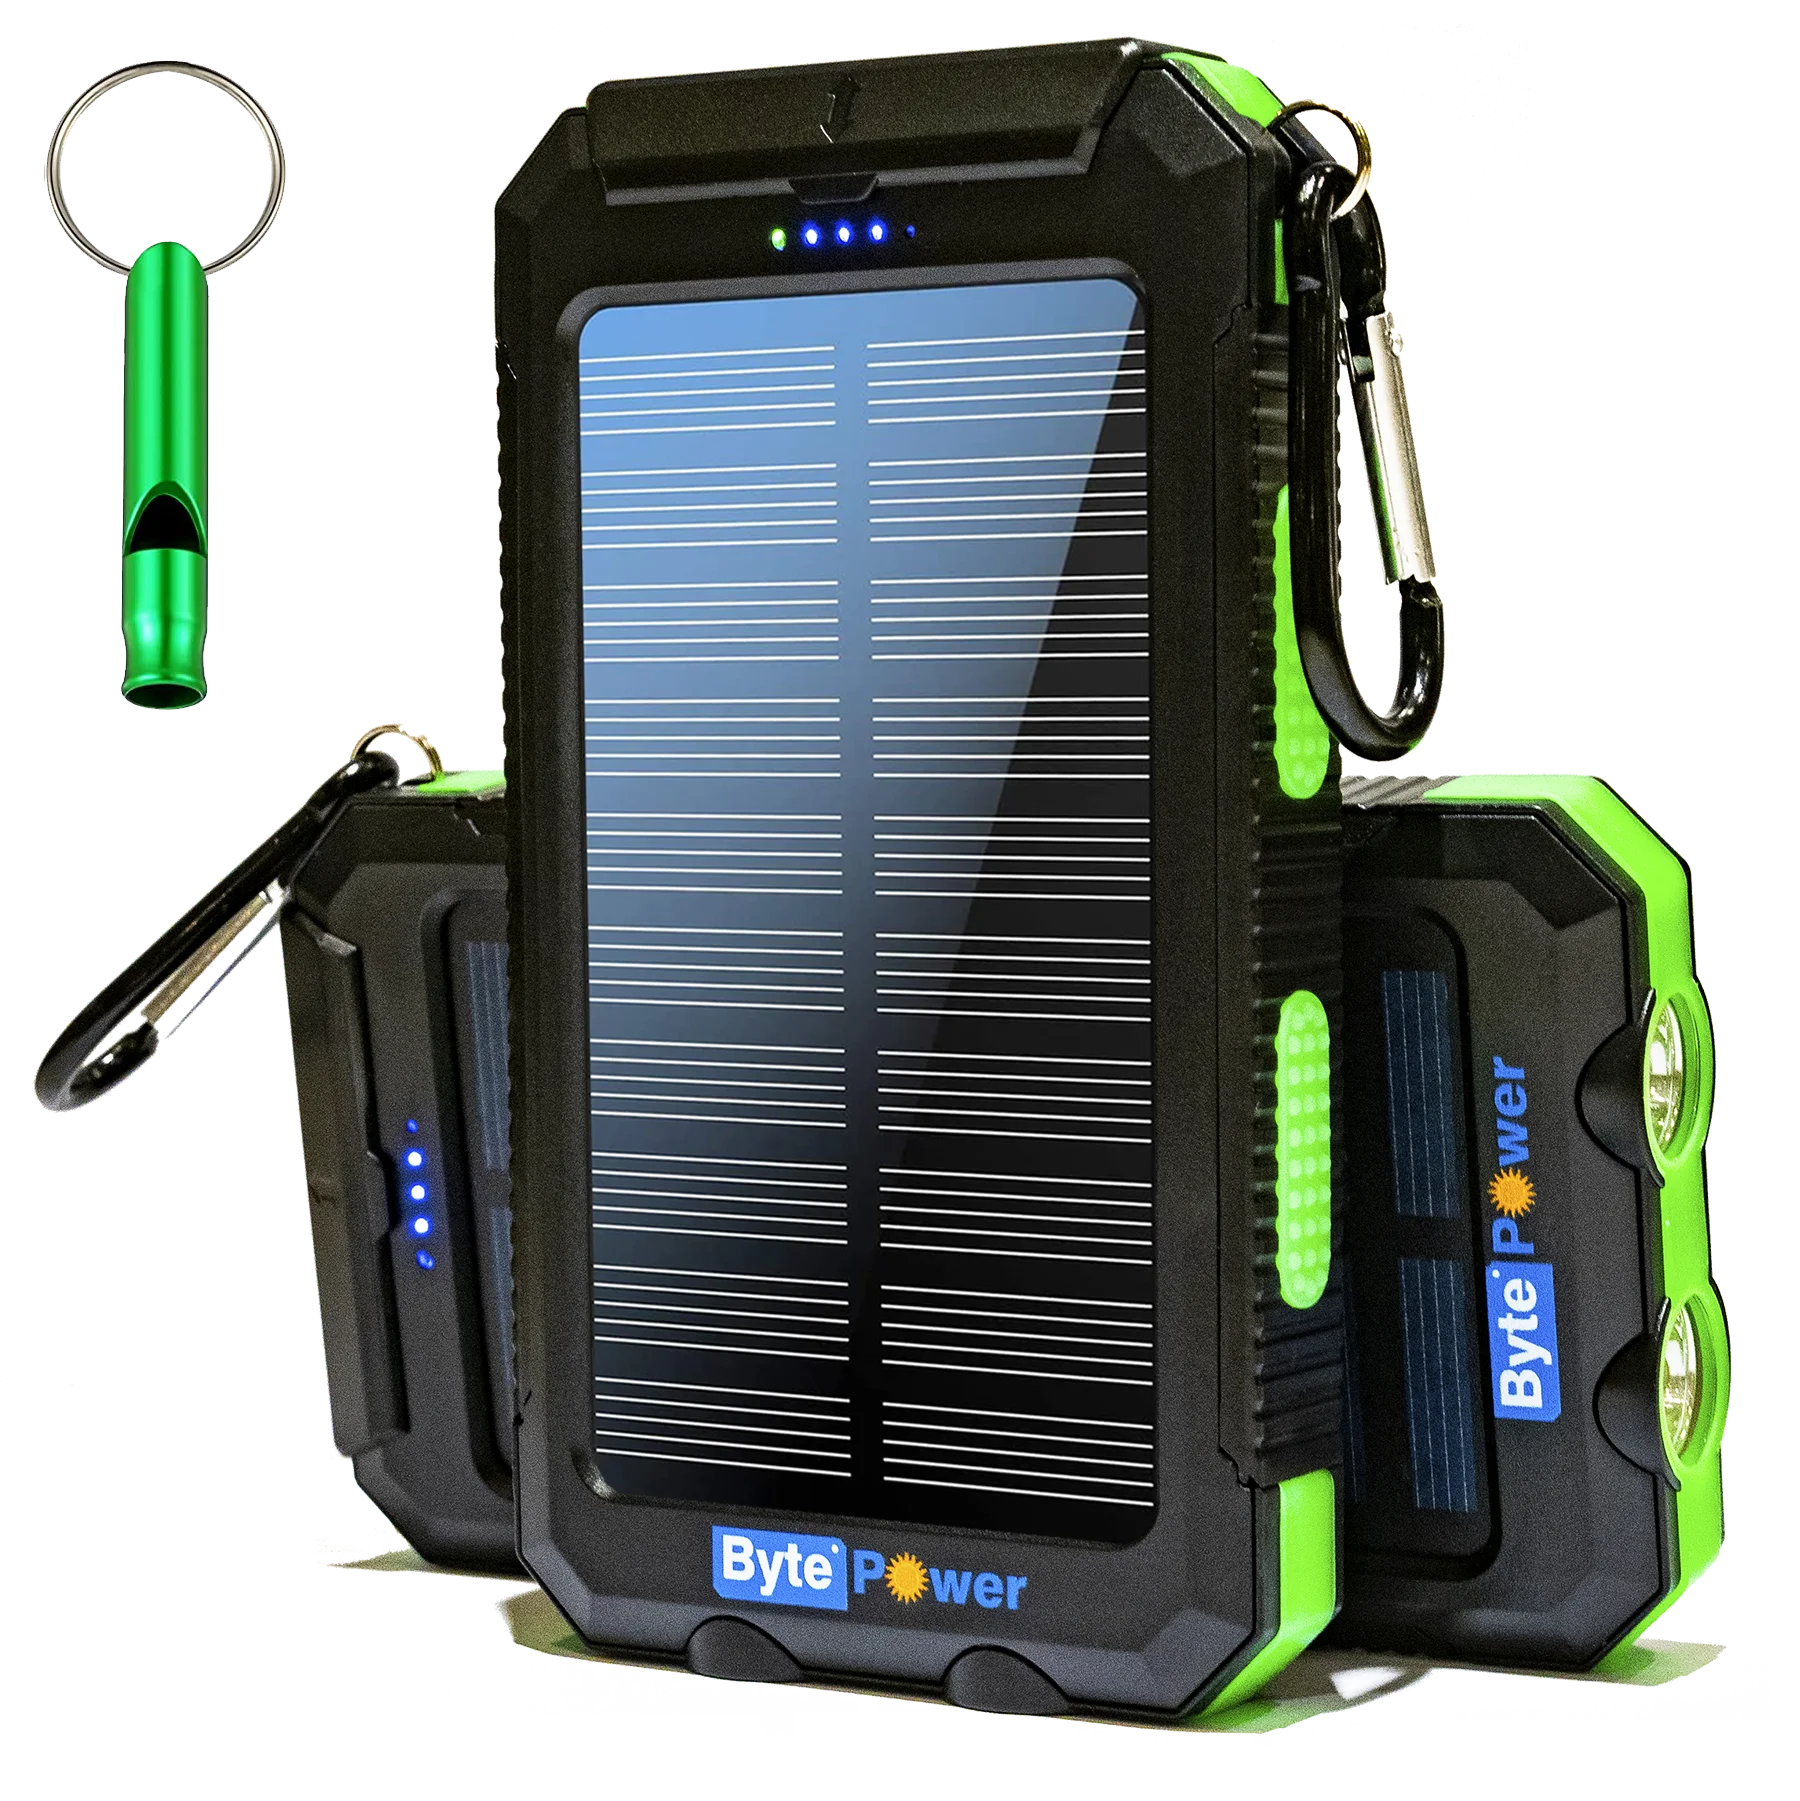 

BytePower Solar Charger Power Bank 20000mAh Solar Charger for outdoor portable Solar Power bank, Customzied